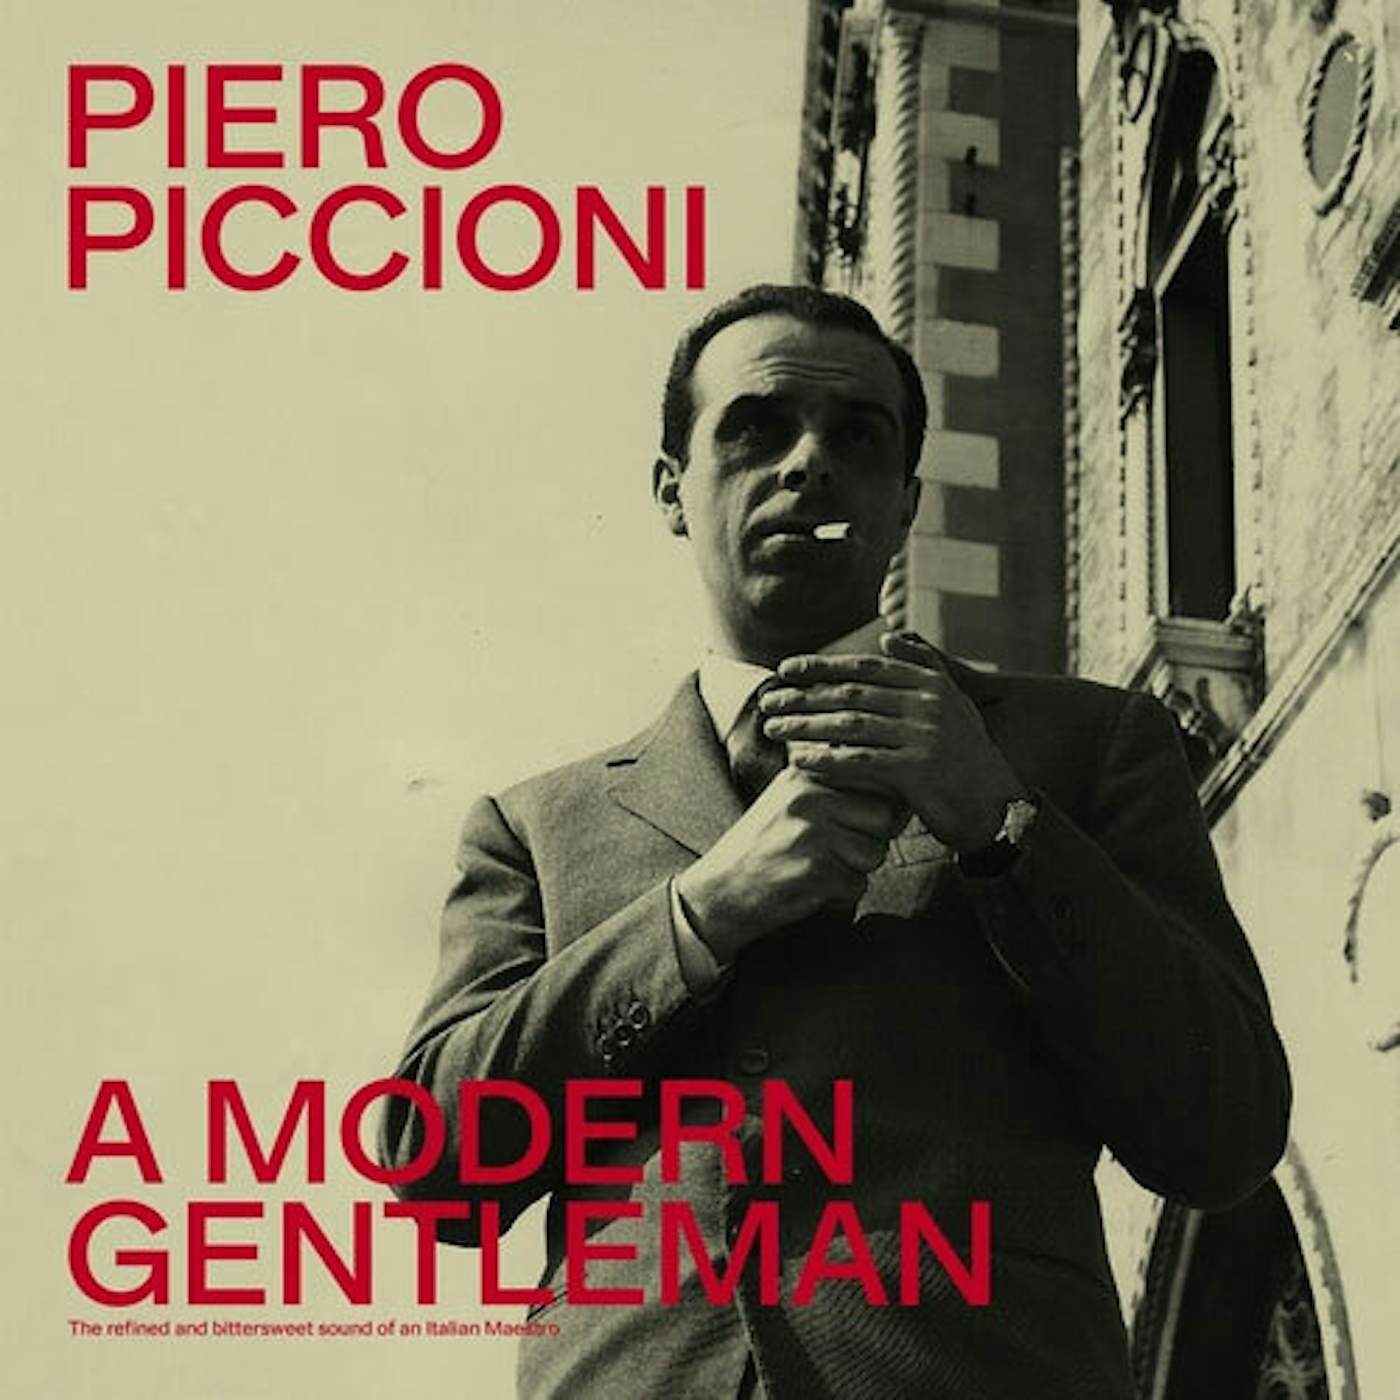 Piero Piccioni MODERN GENTLEMAN (2LP) Vinyl Record